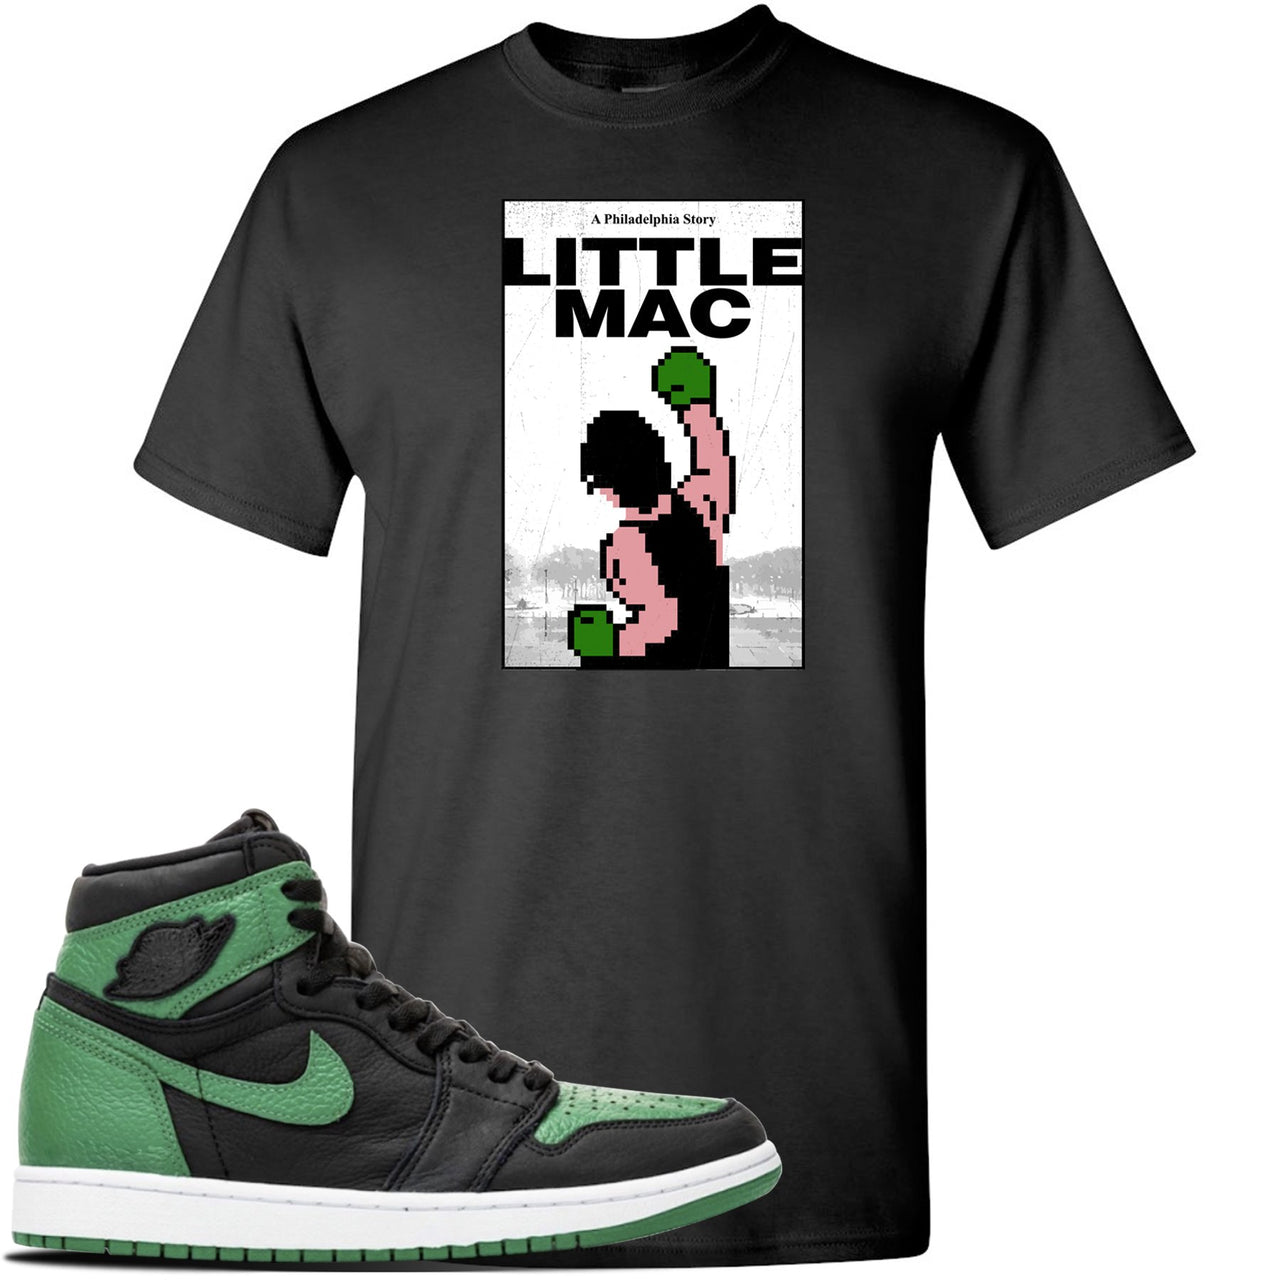 Jordan 1 Retro High OG Pine Green Gym Sneaker Black T Shirt | Tees to match Air Jordan 1 Retro High OG Pine Green Gym Shoes | Little Mac A Philly Story